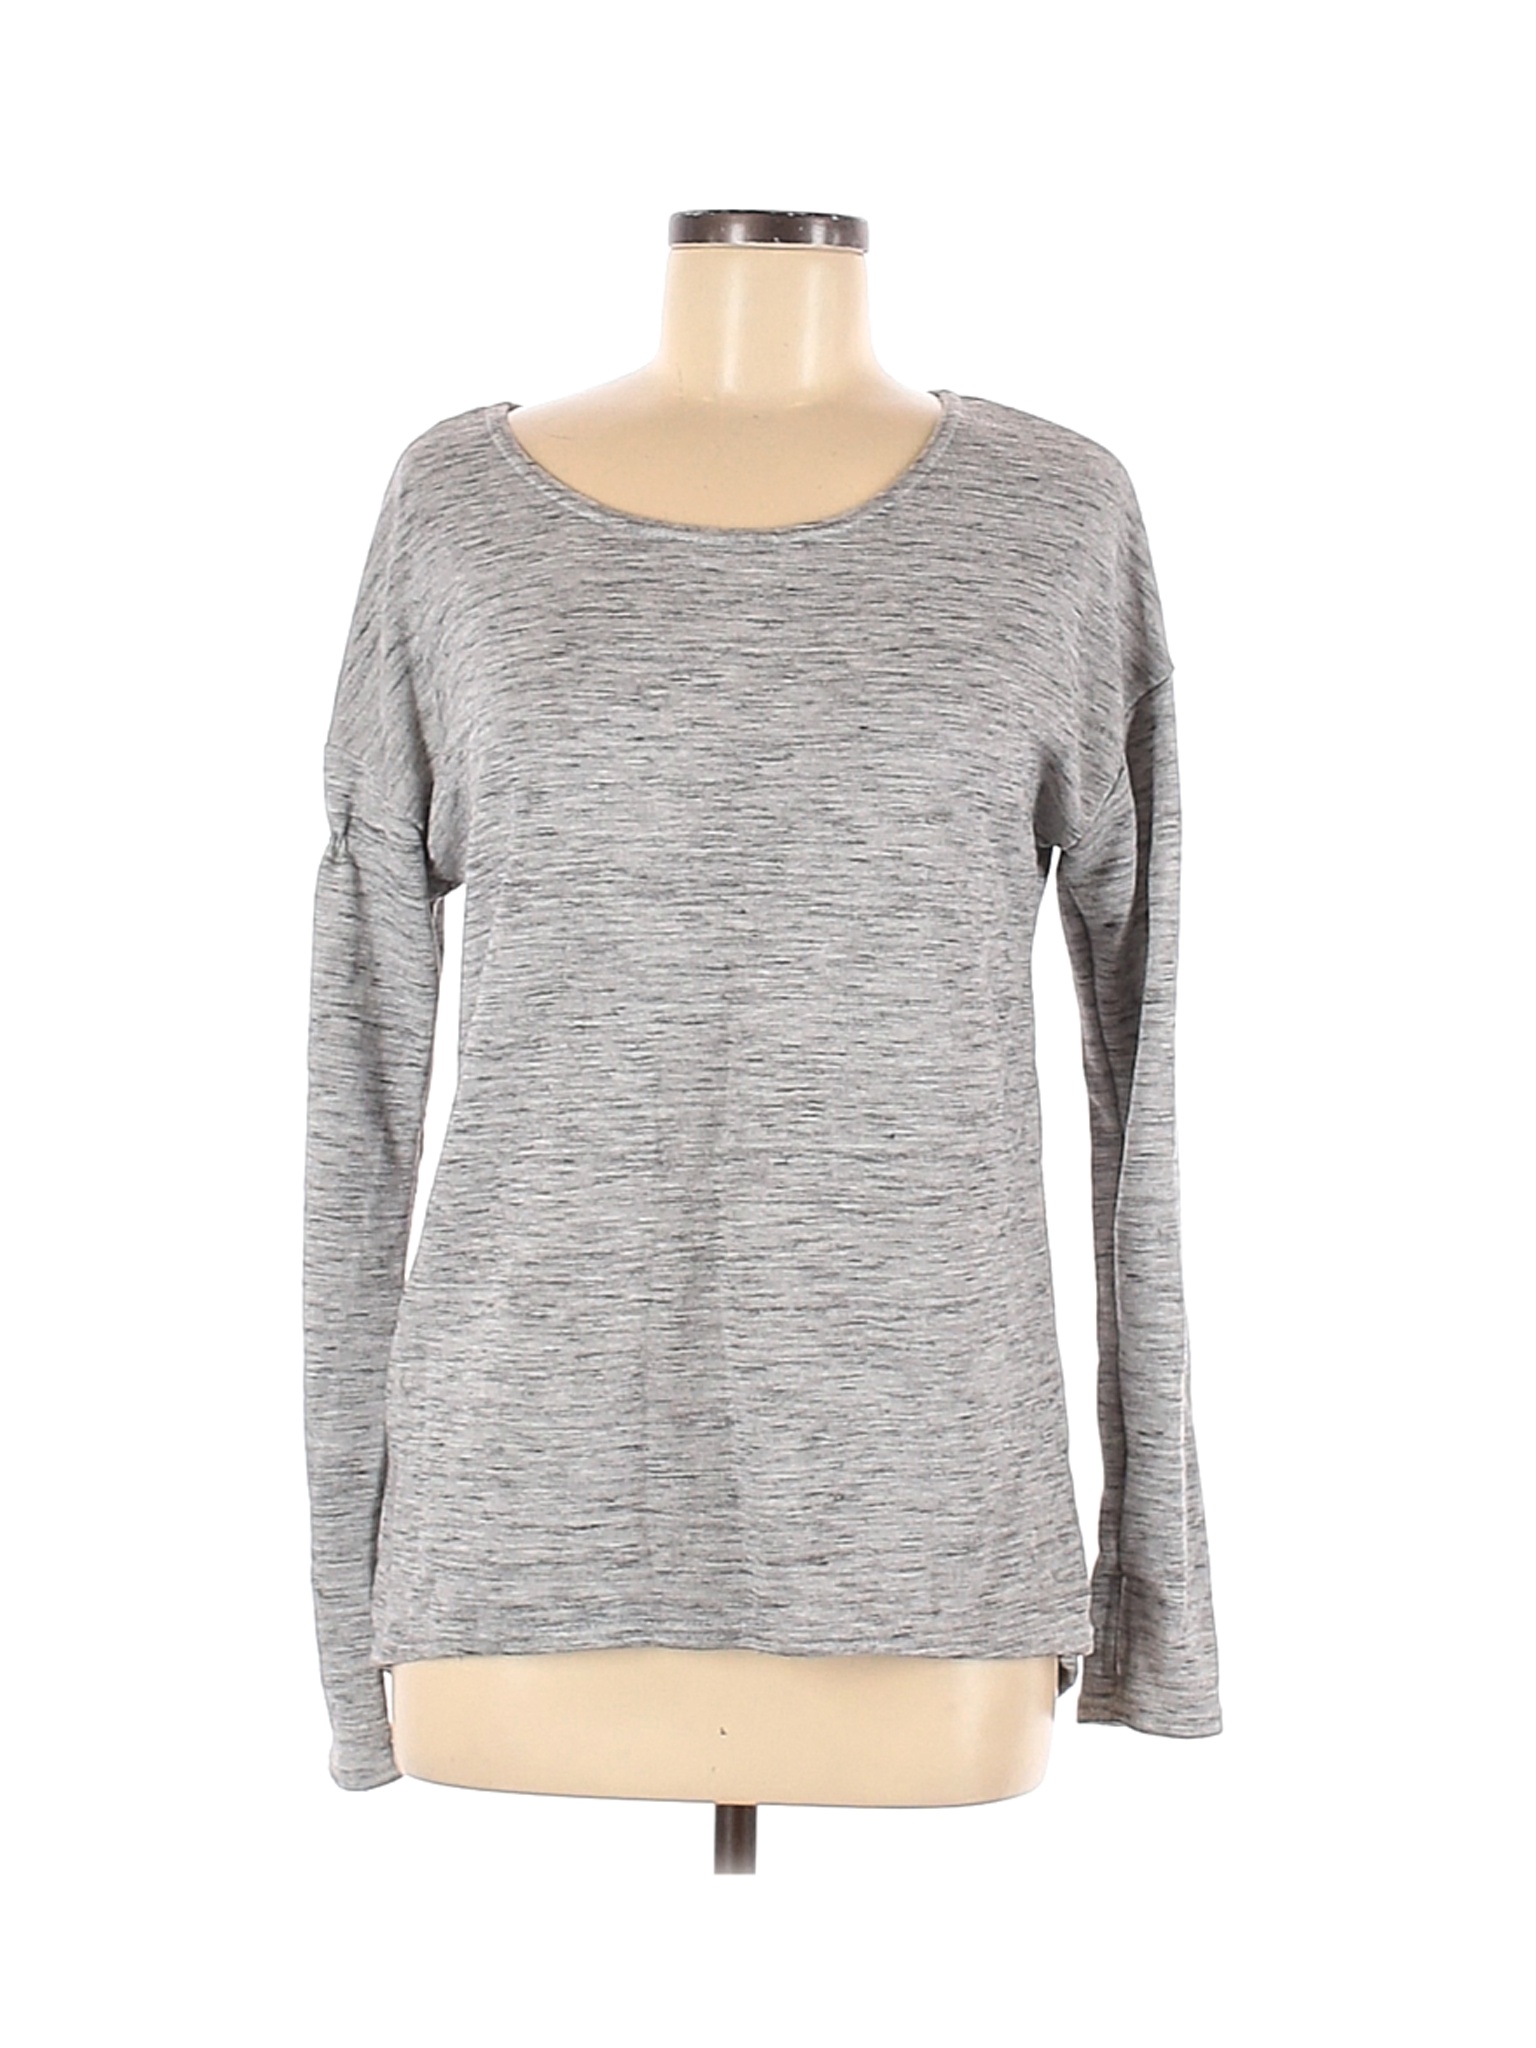 Danskin Now Women Gray Pullover Sweater M | eBay